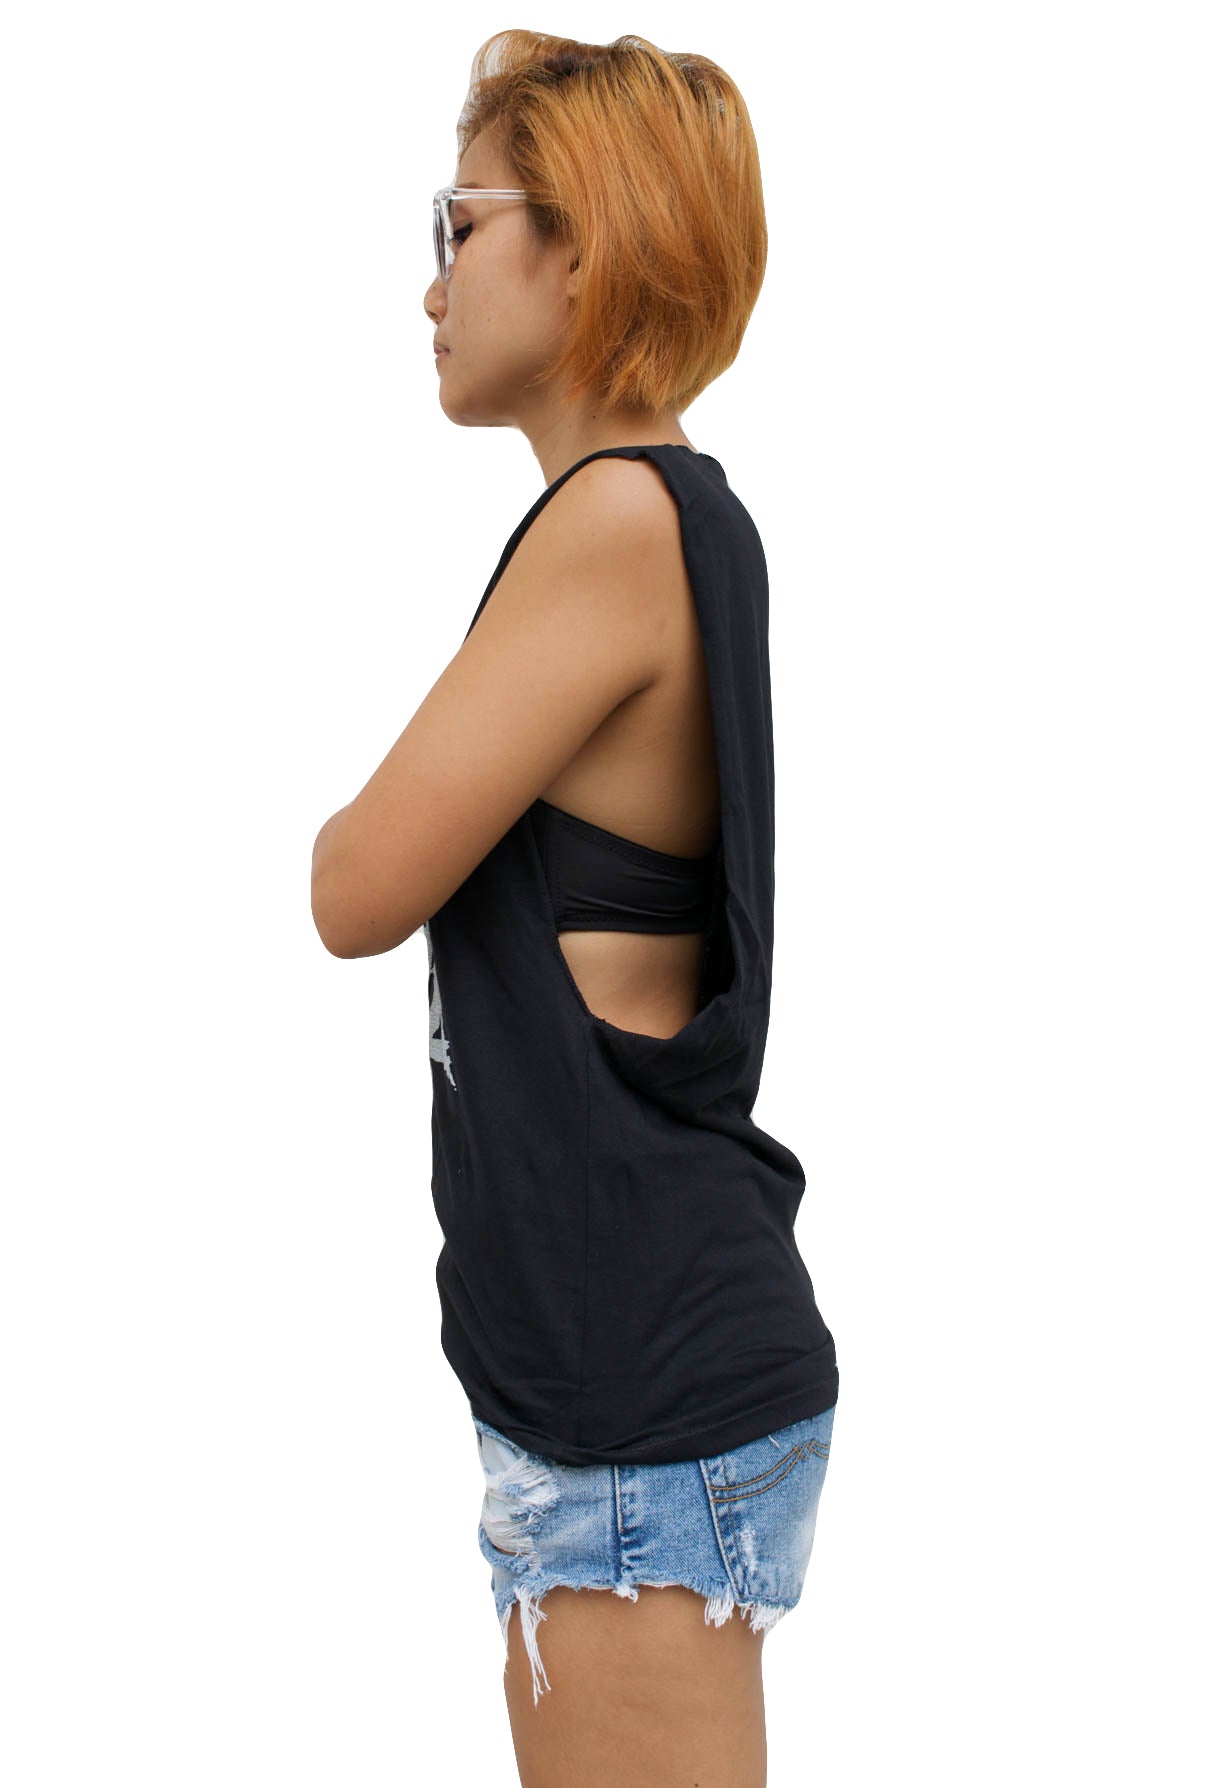 Ladies The Cramps Vest Tank-Top Singlet Sleeveless T-Shirt